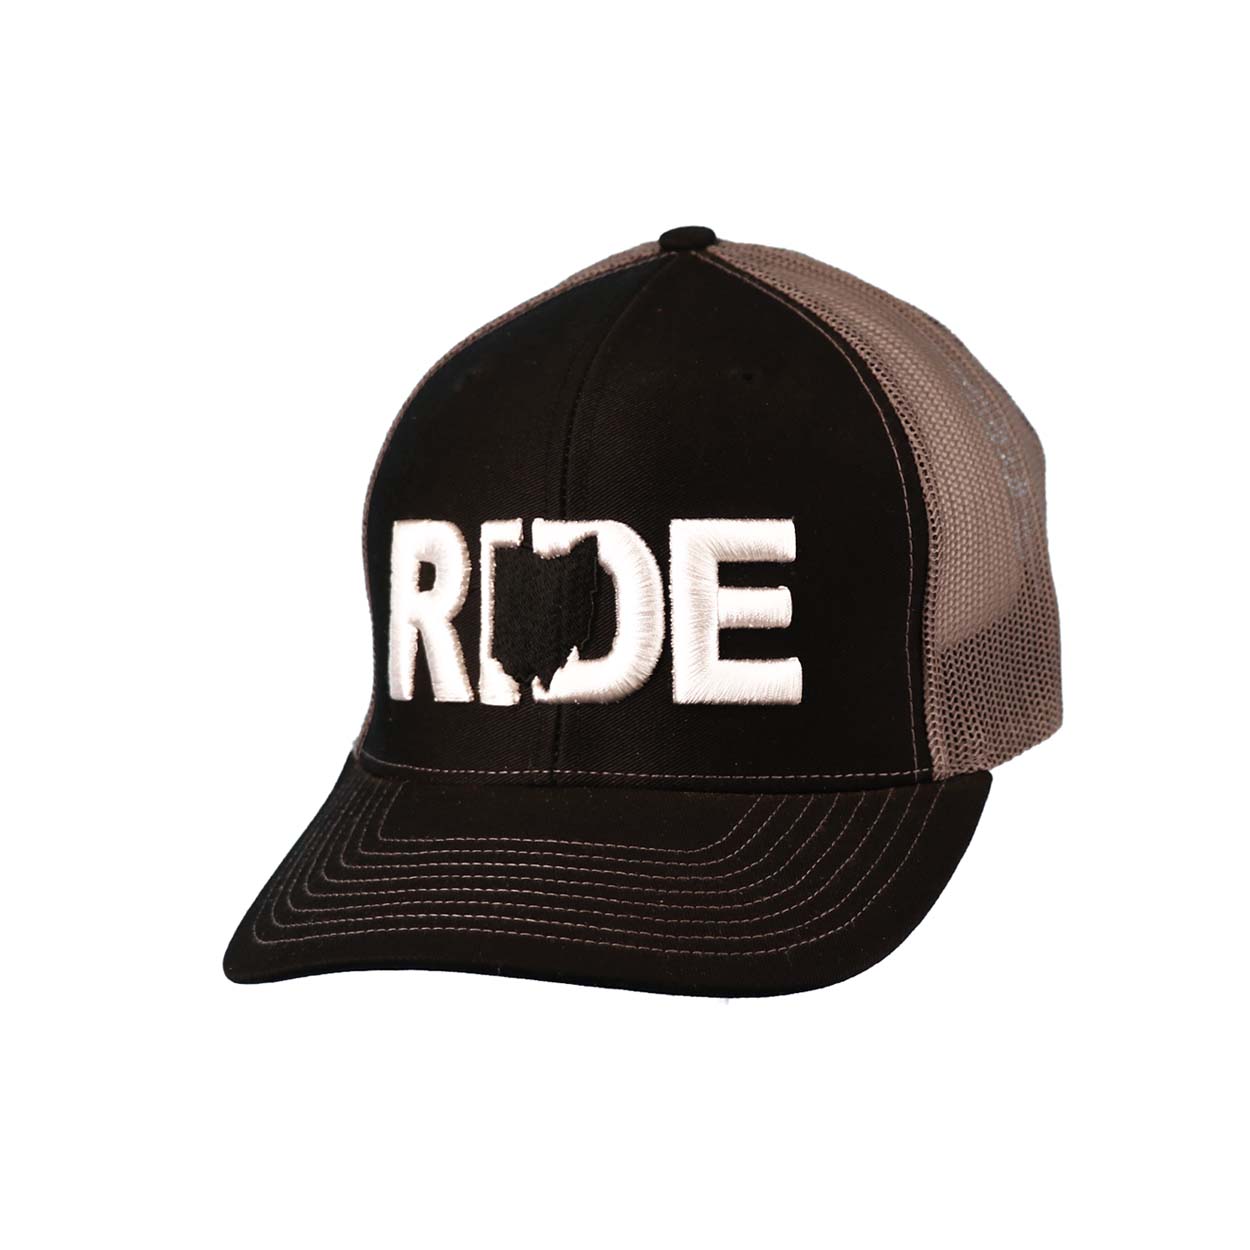 Ride Ohio Classic Embroidered Snapback Trucker Hat Black/Gray